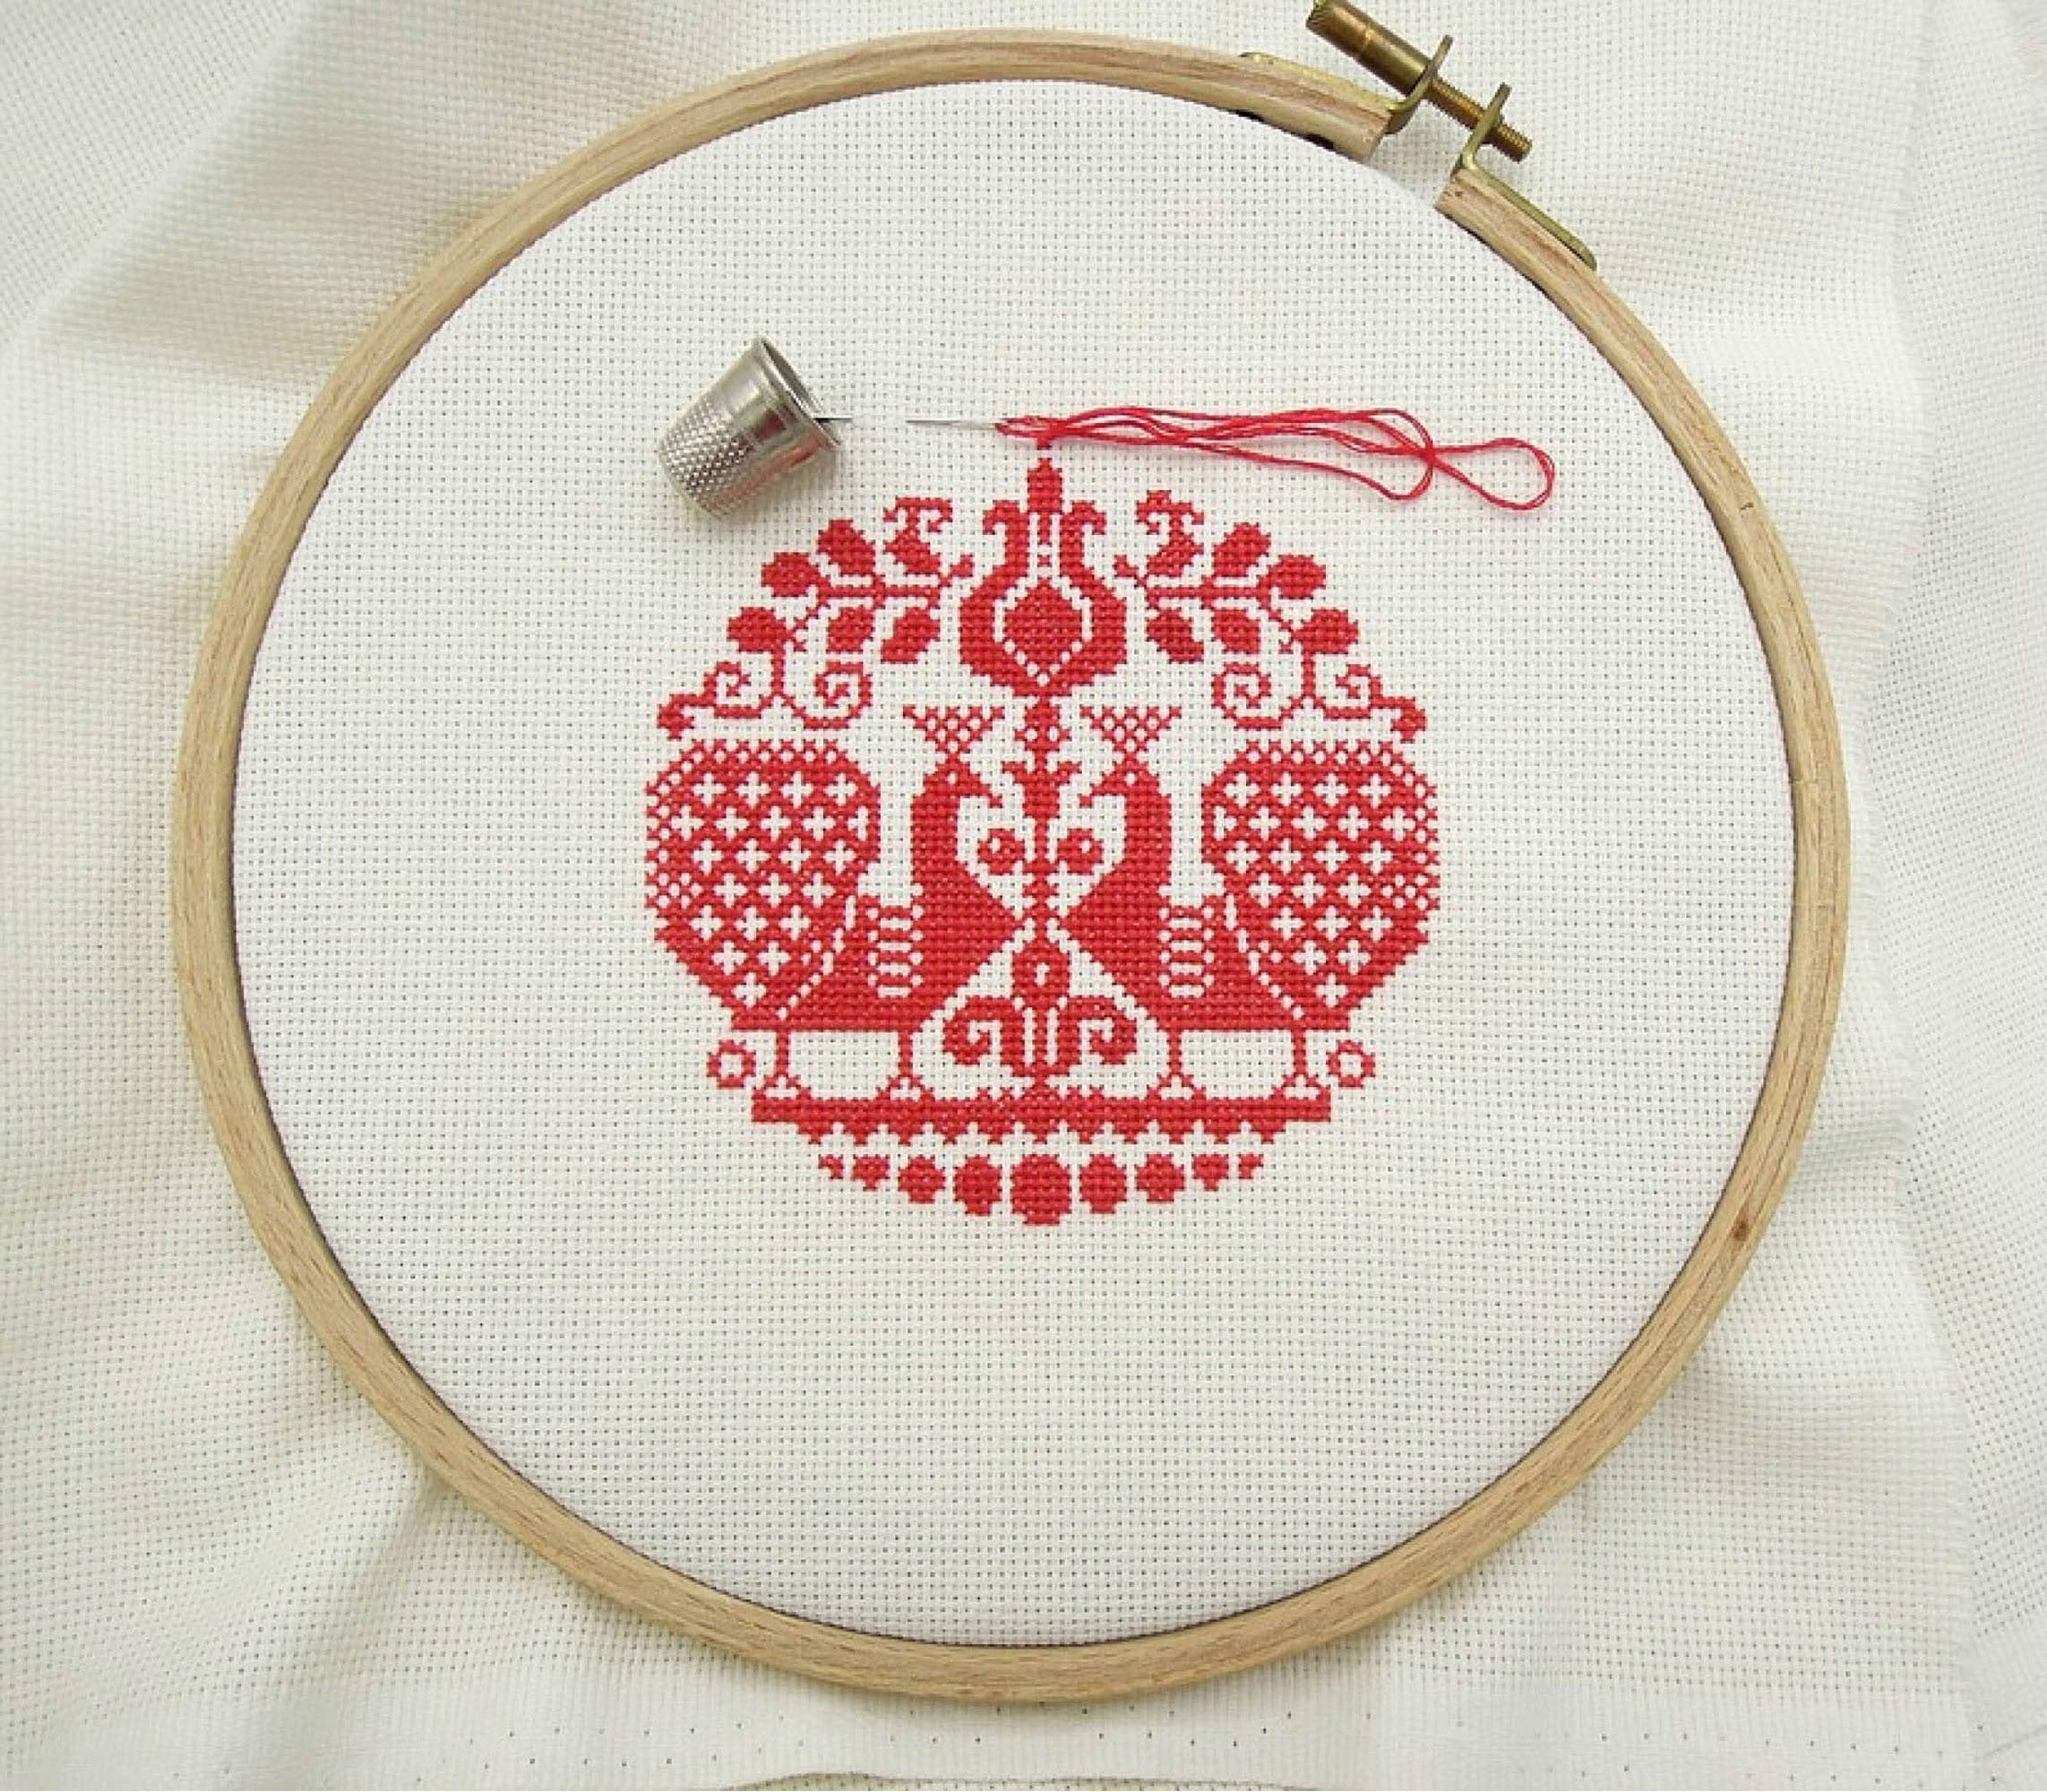  VILLCASE 6pcs Cross Stitch Embroidery Cloth Fabric